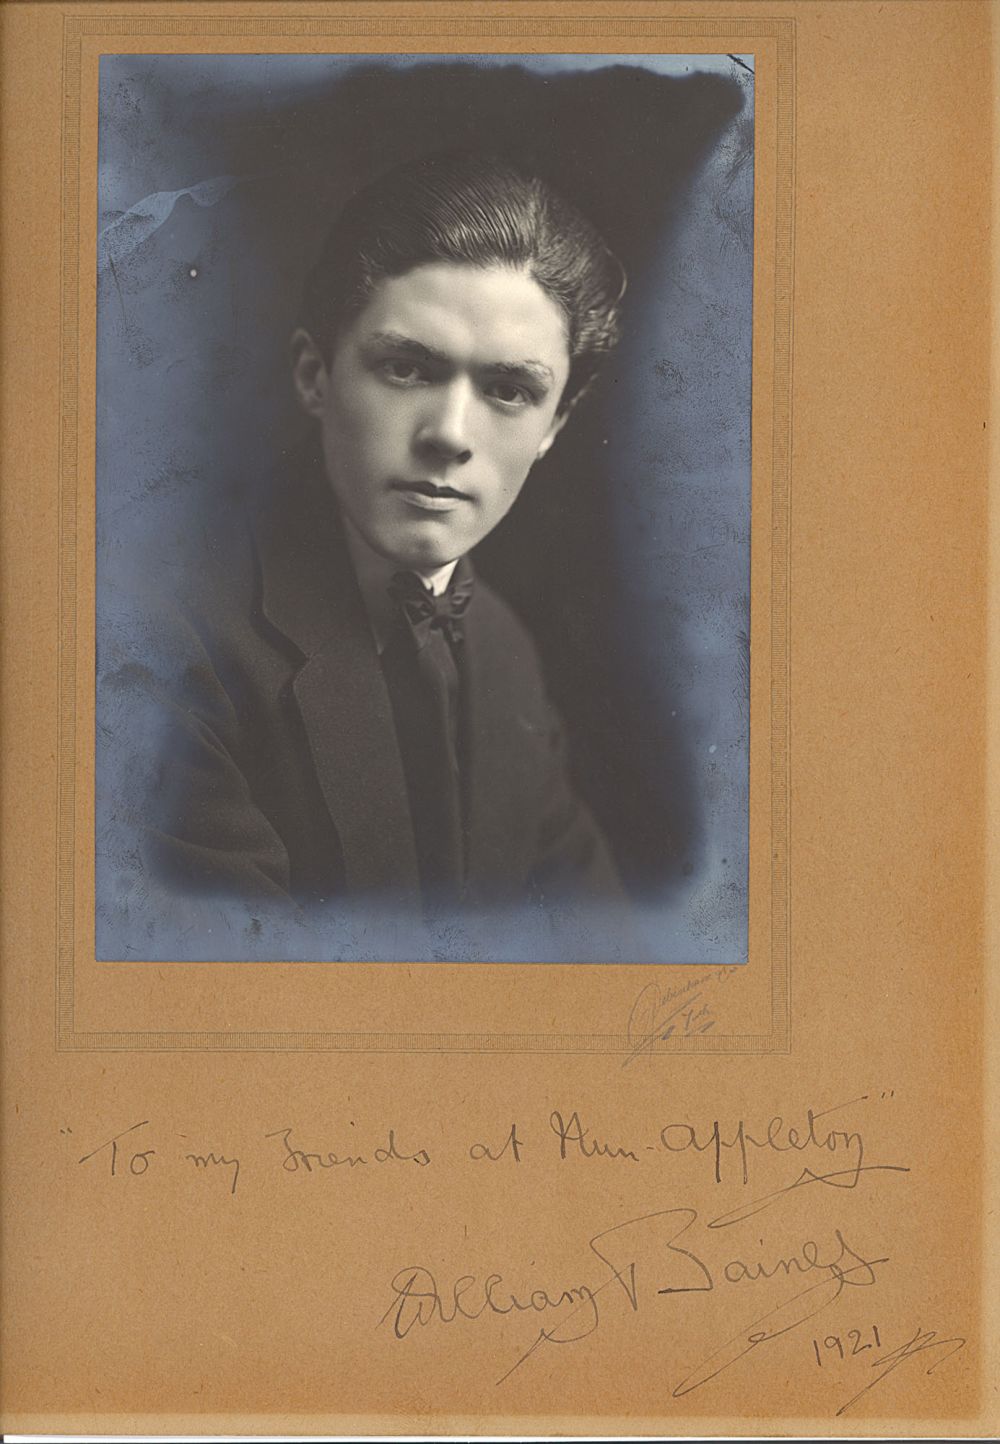 Signed photo of William Baines, Composer (1899-1922)